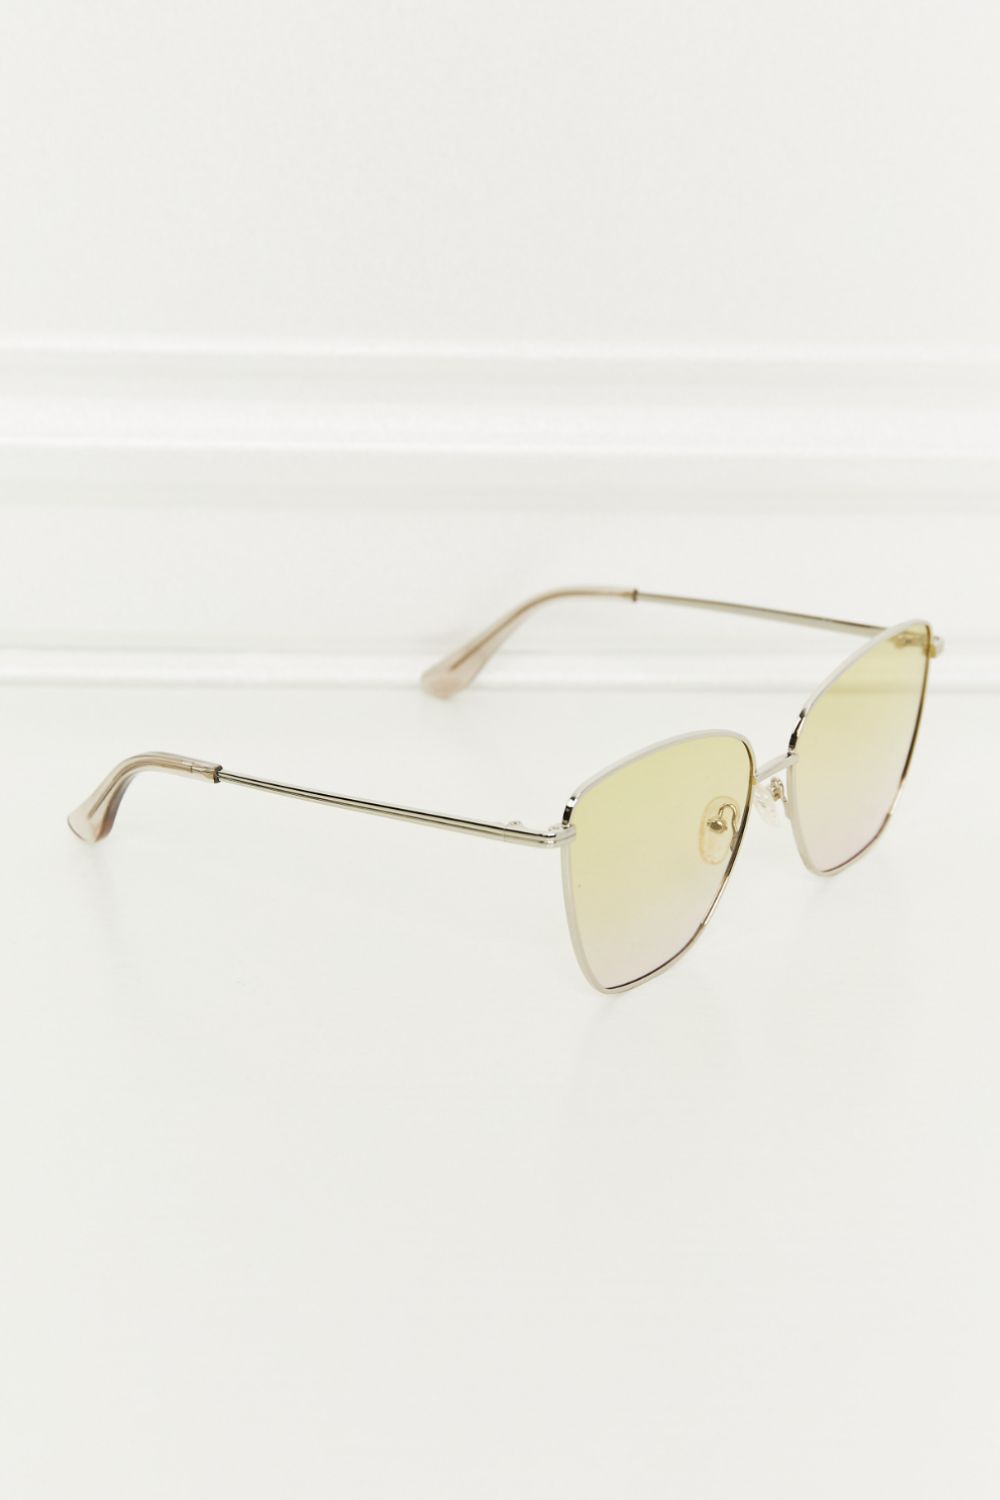 Metal Frame Full Rim Sunglasses Lemon One Size Sunglasses by Vim&Vigor | Vim&Vigor Boutique